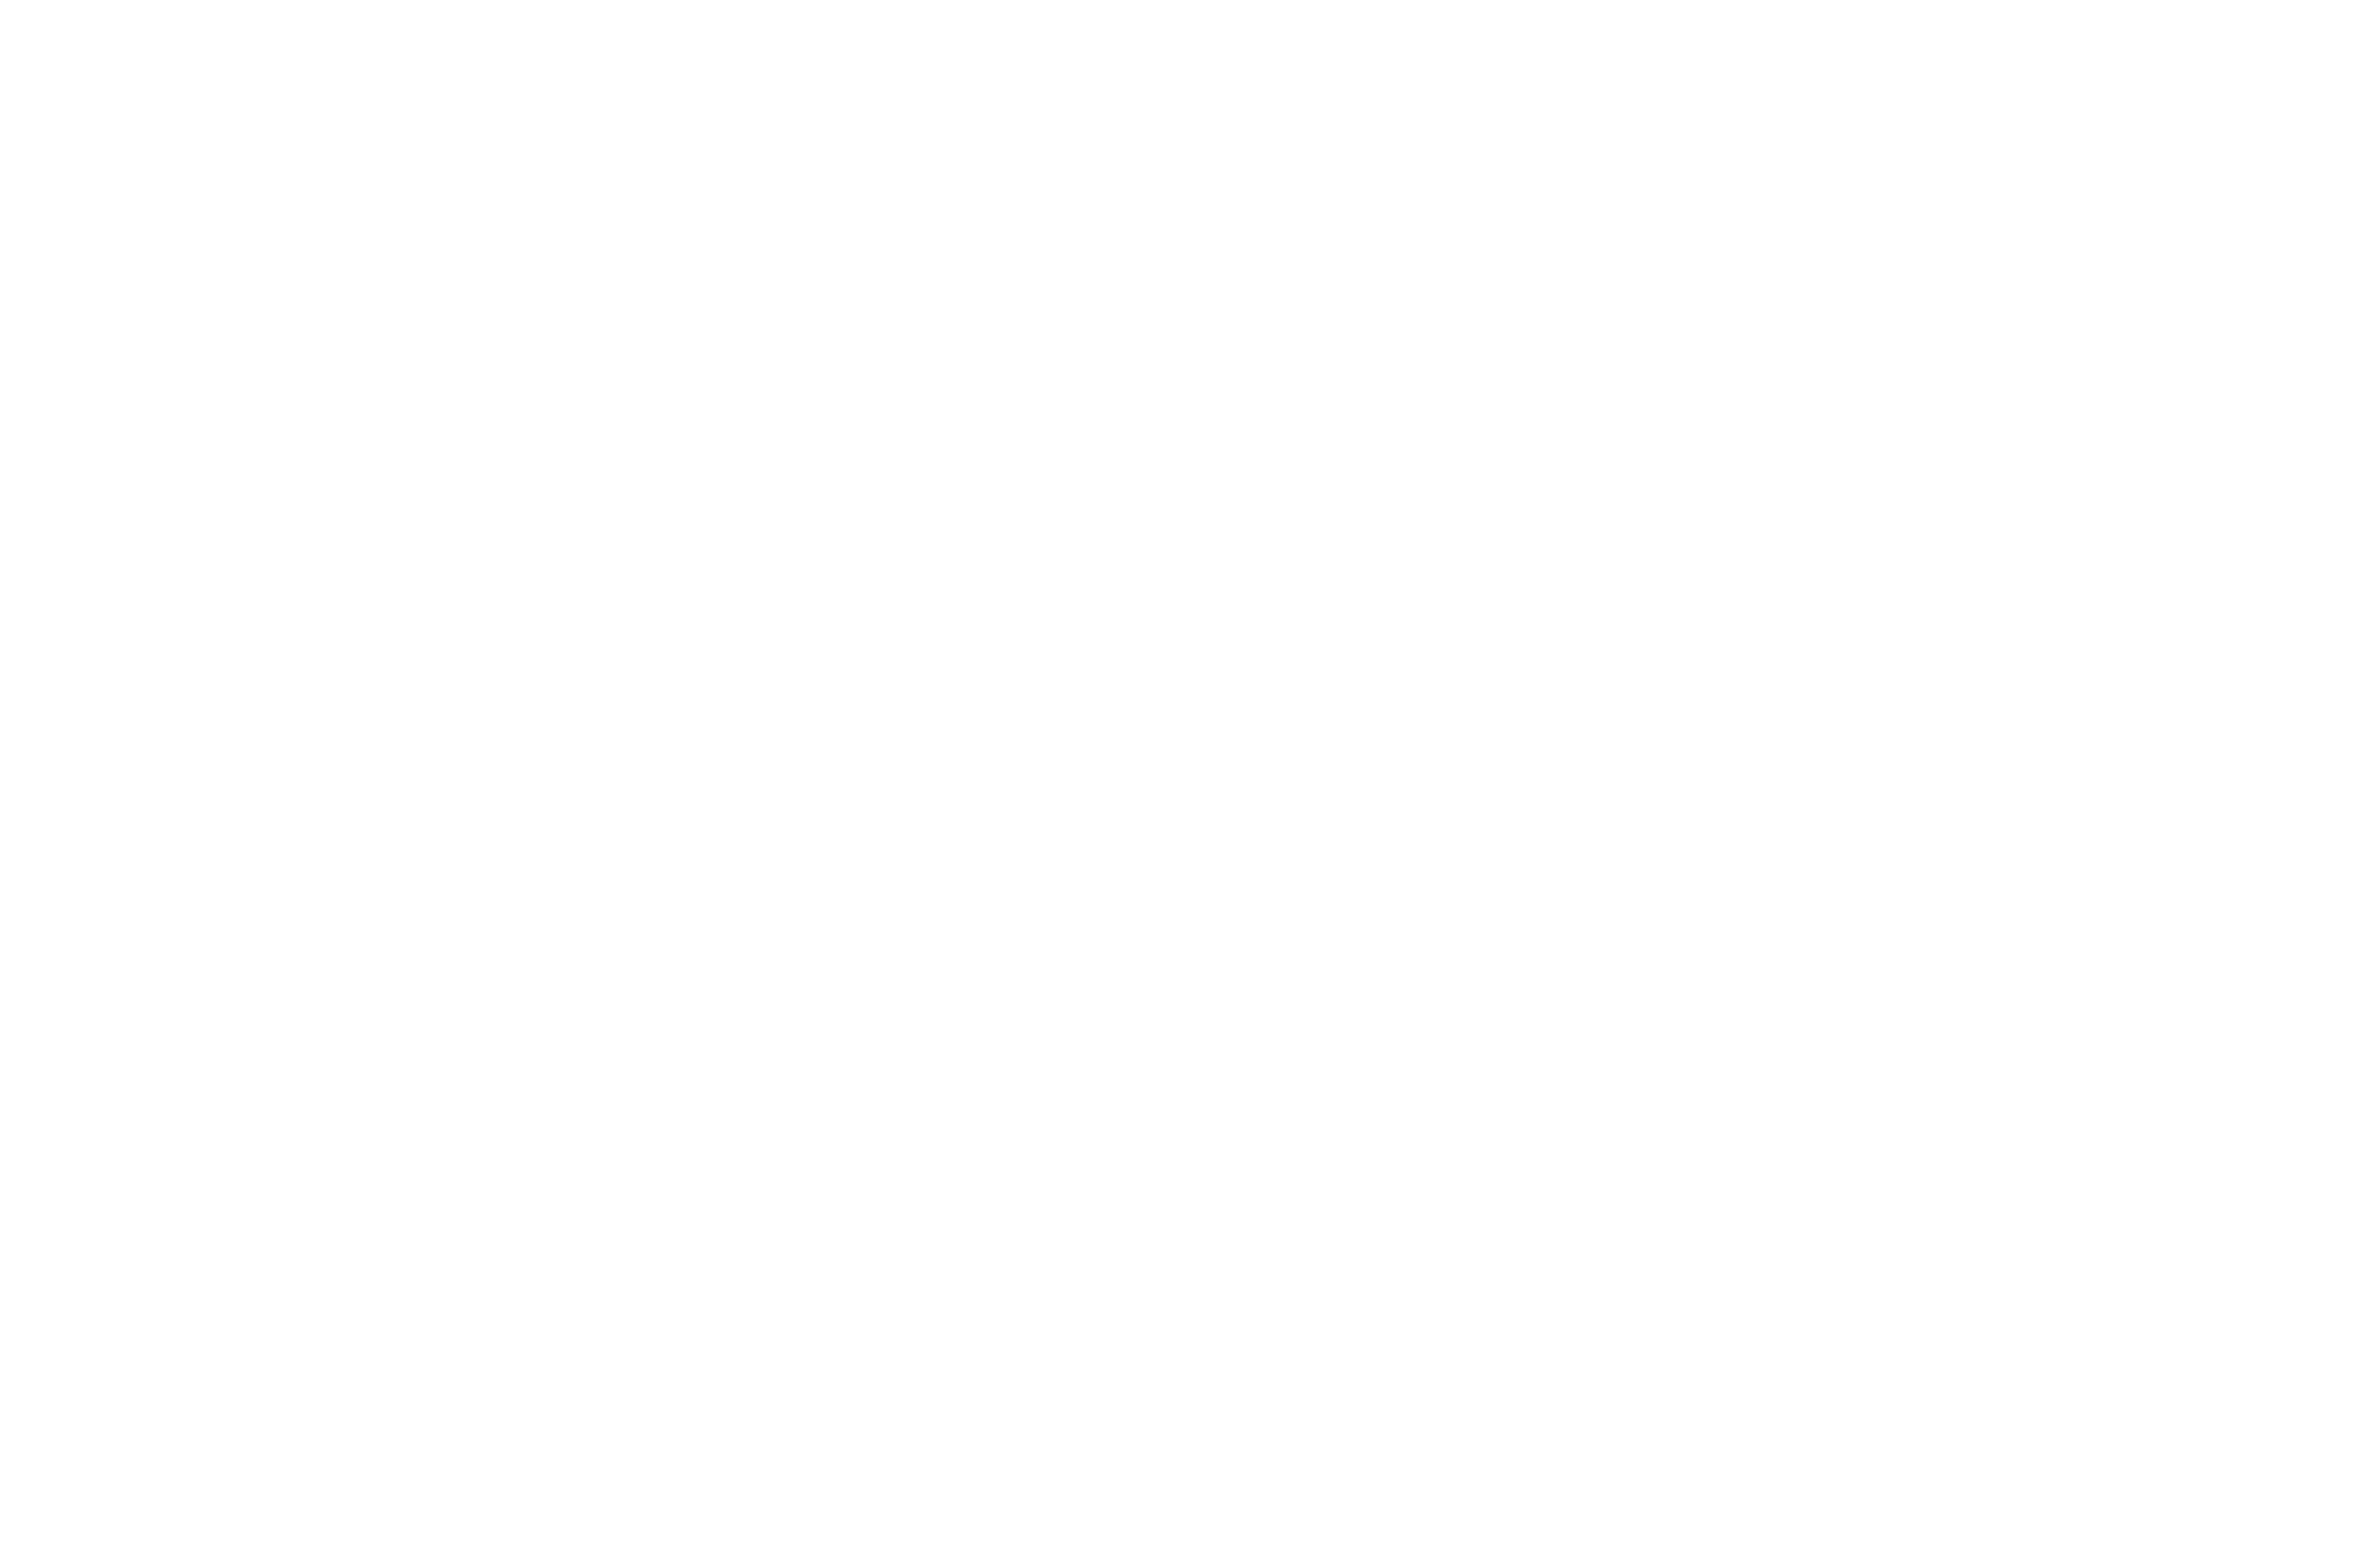 Hotel Posada del Cordobés | Web Oficial | Cazorla, Jaén